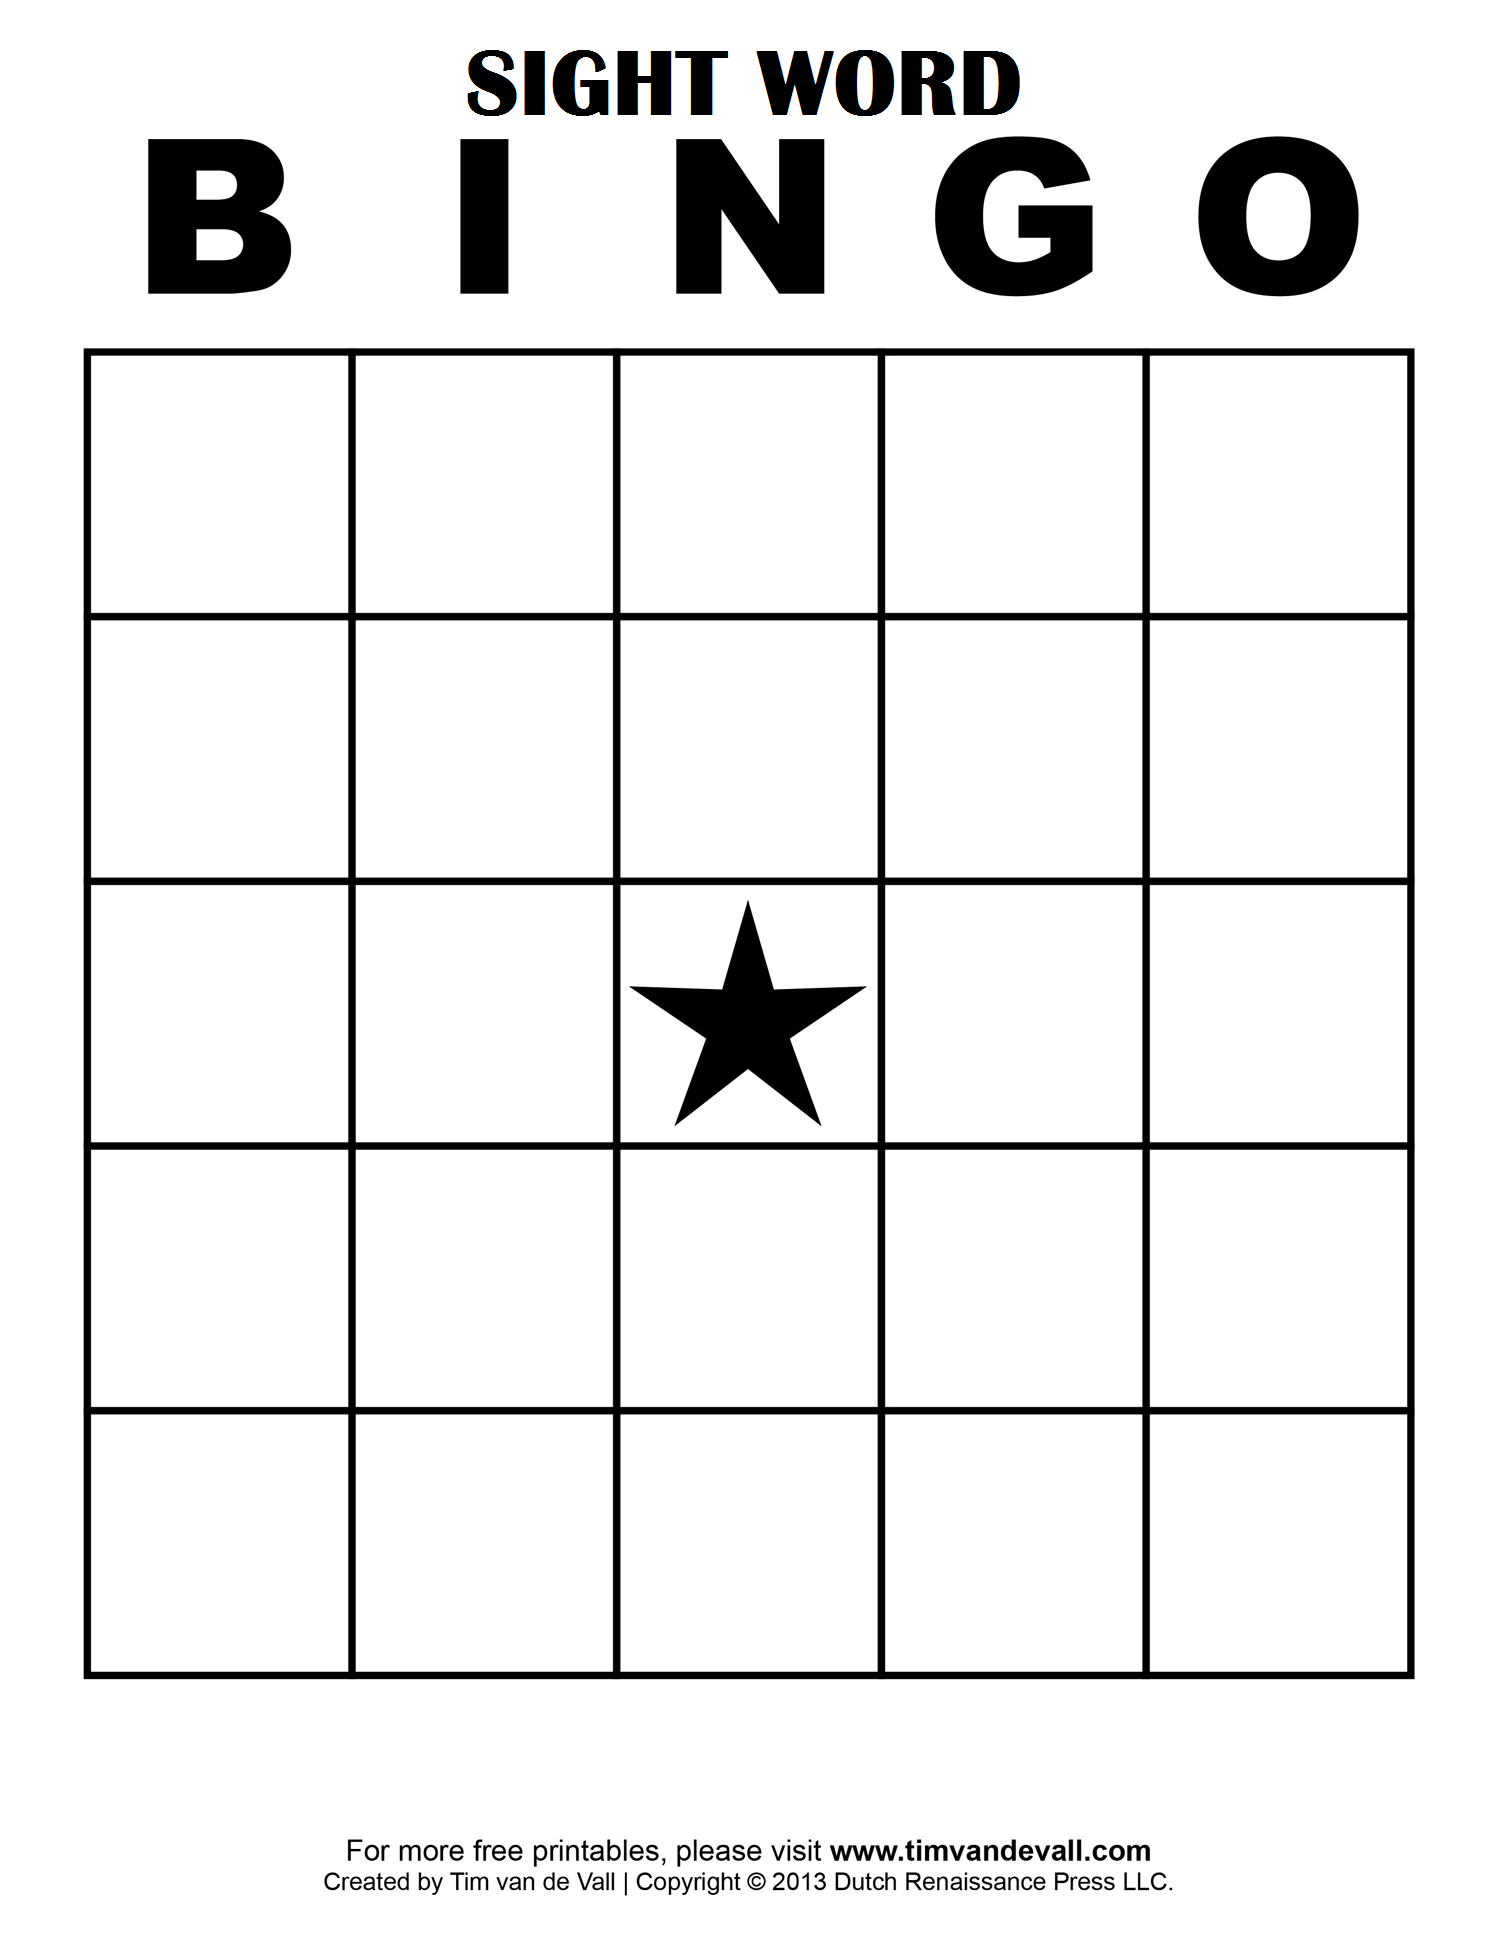 Bingo Generator Free Printable - Free Printable